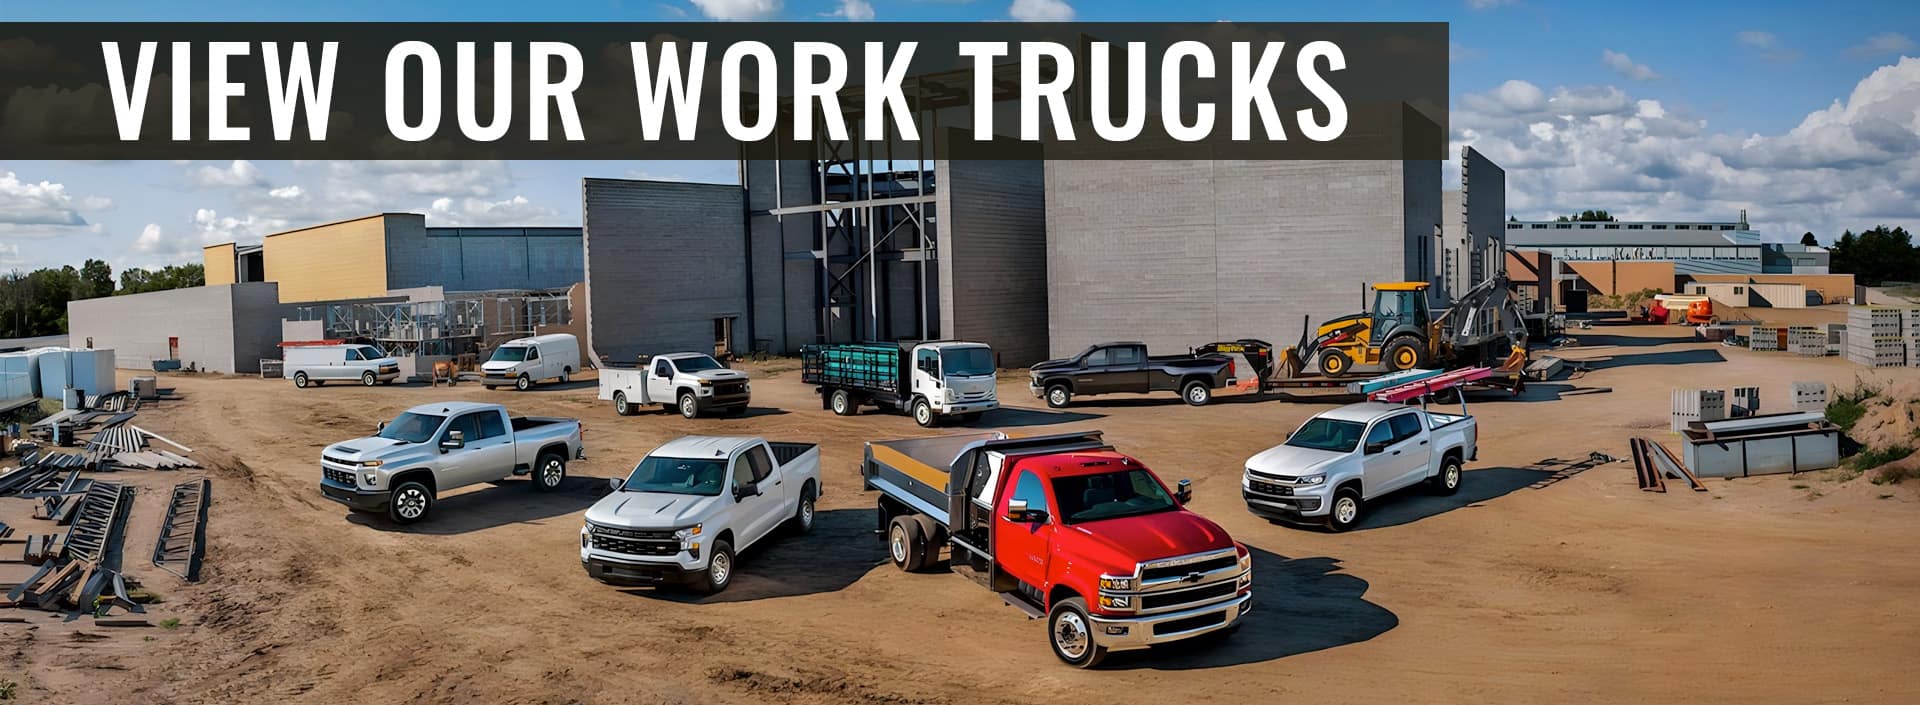 Work Trucks Banner